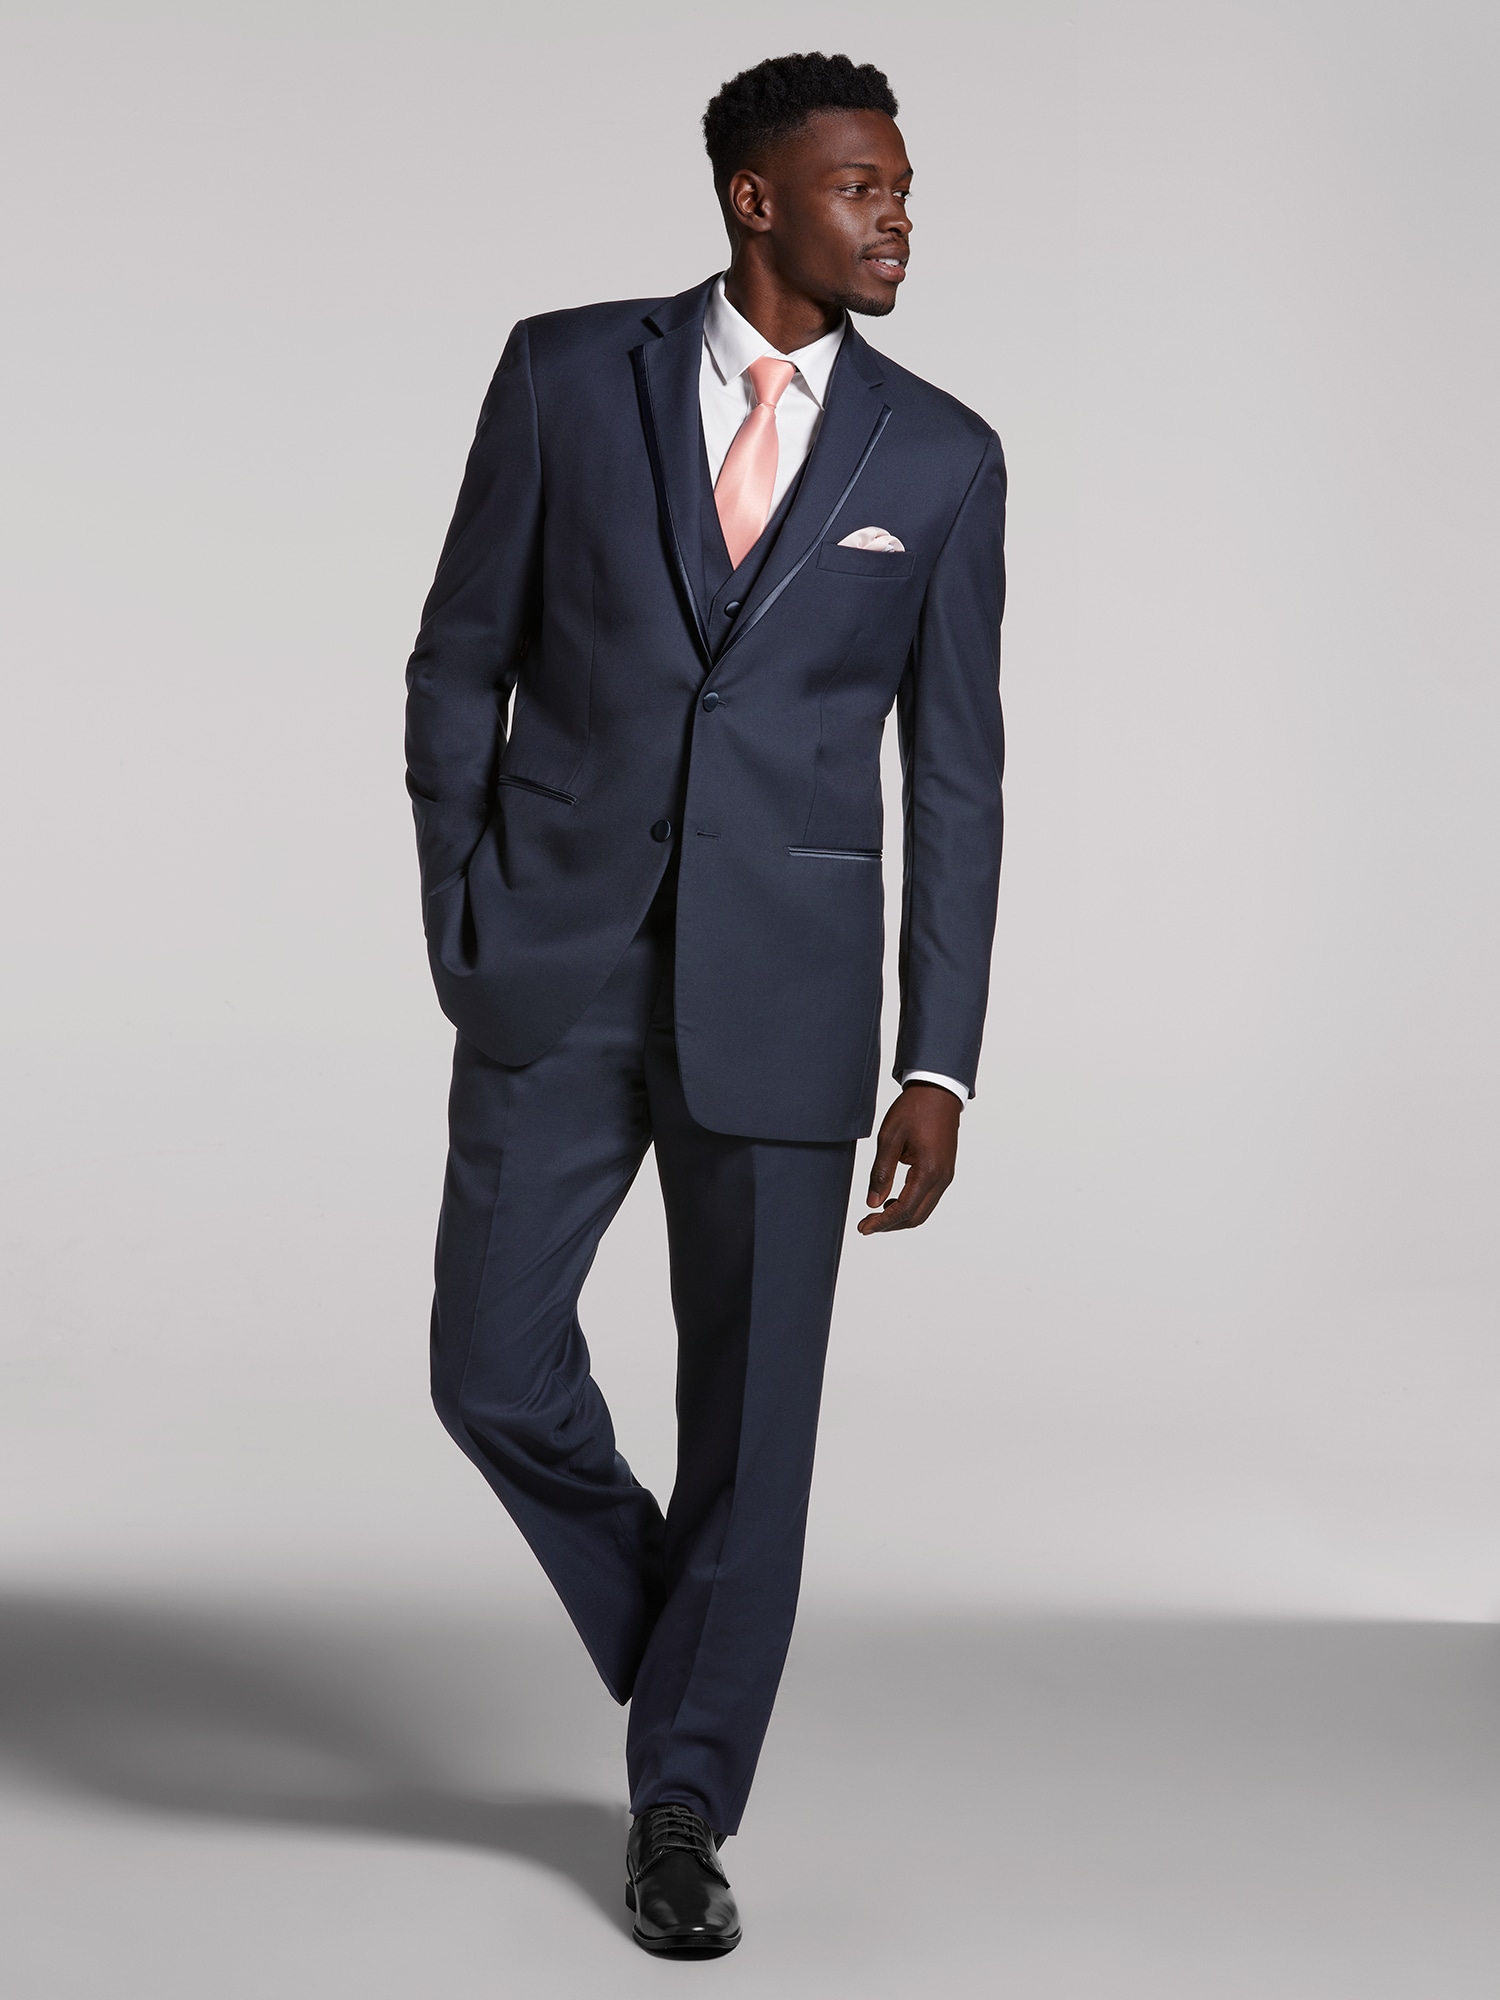 Online Suit & Tuxedo Rental/Purchase